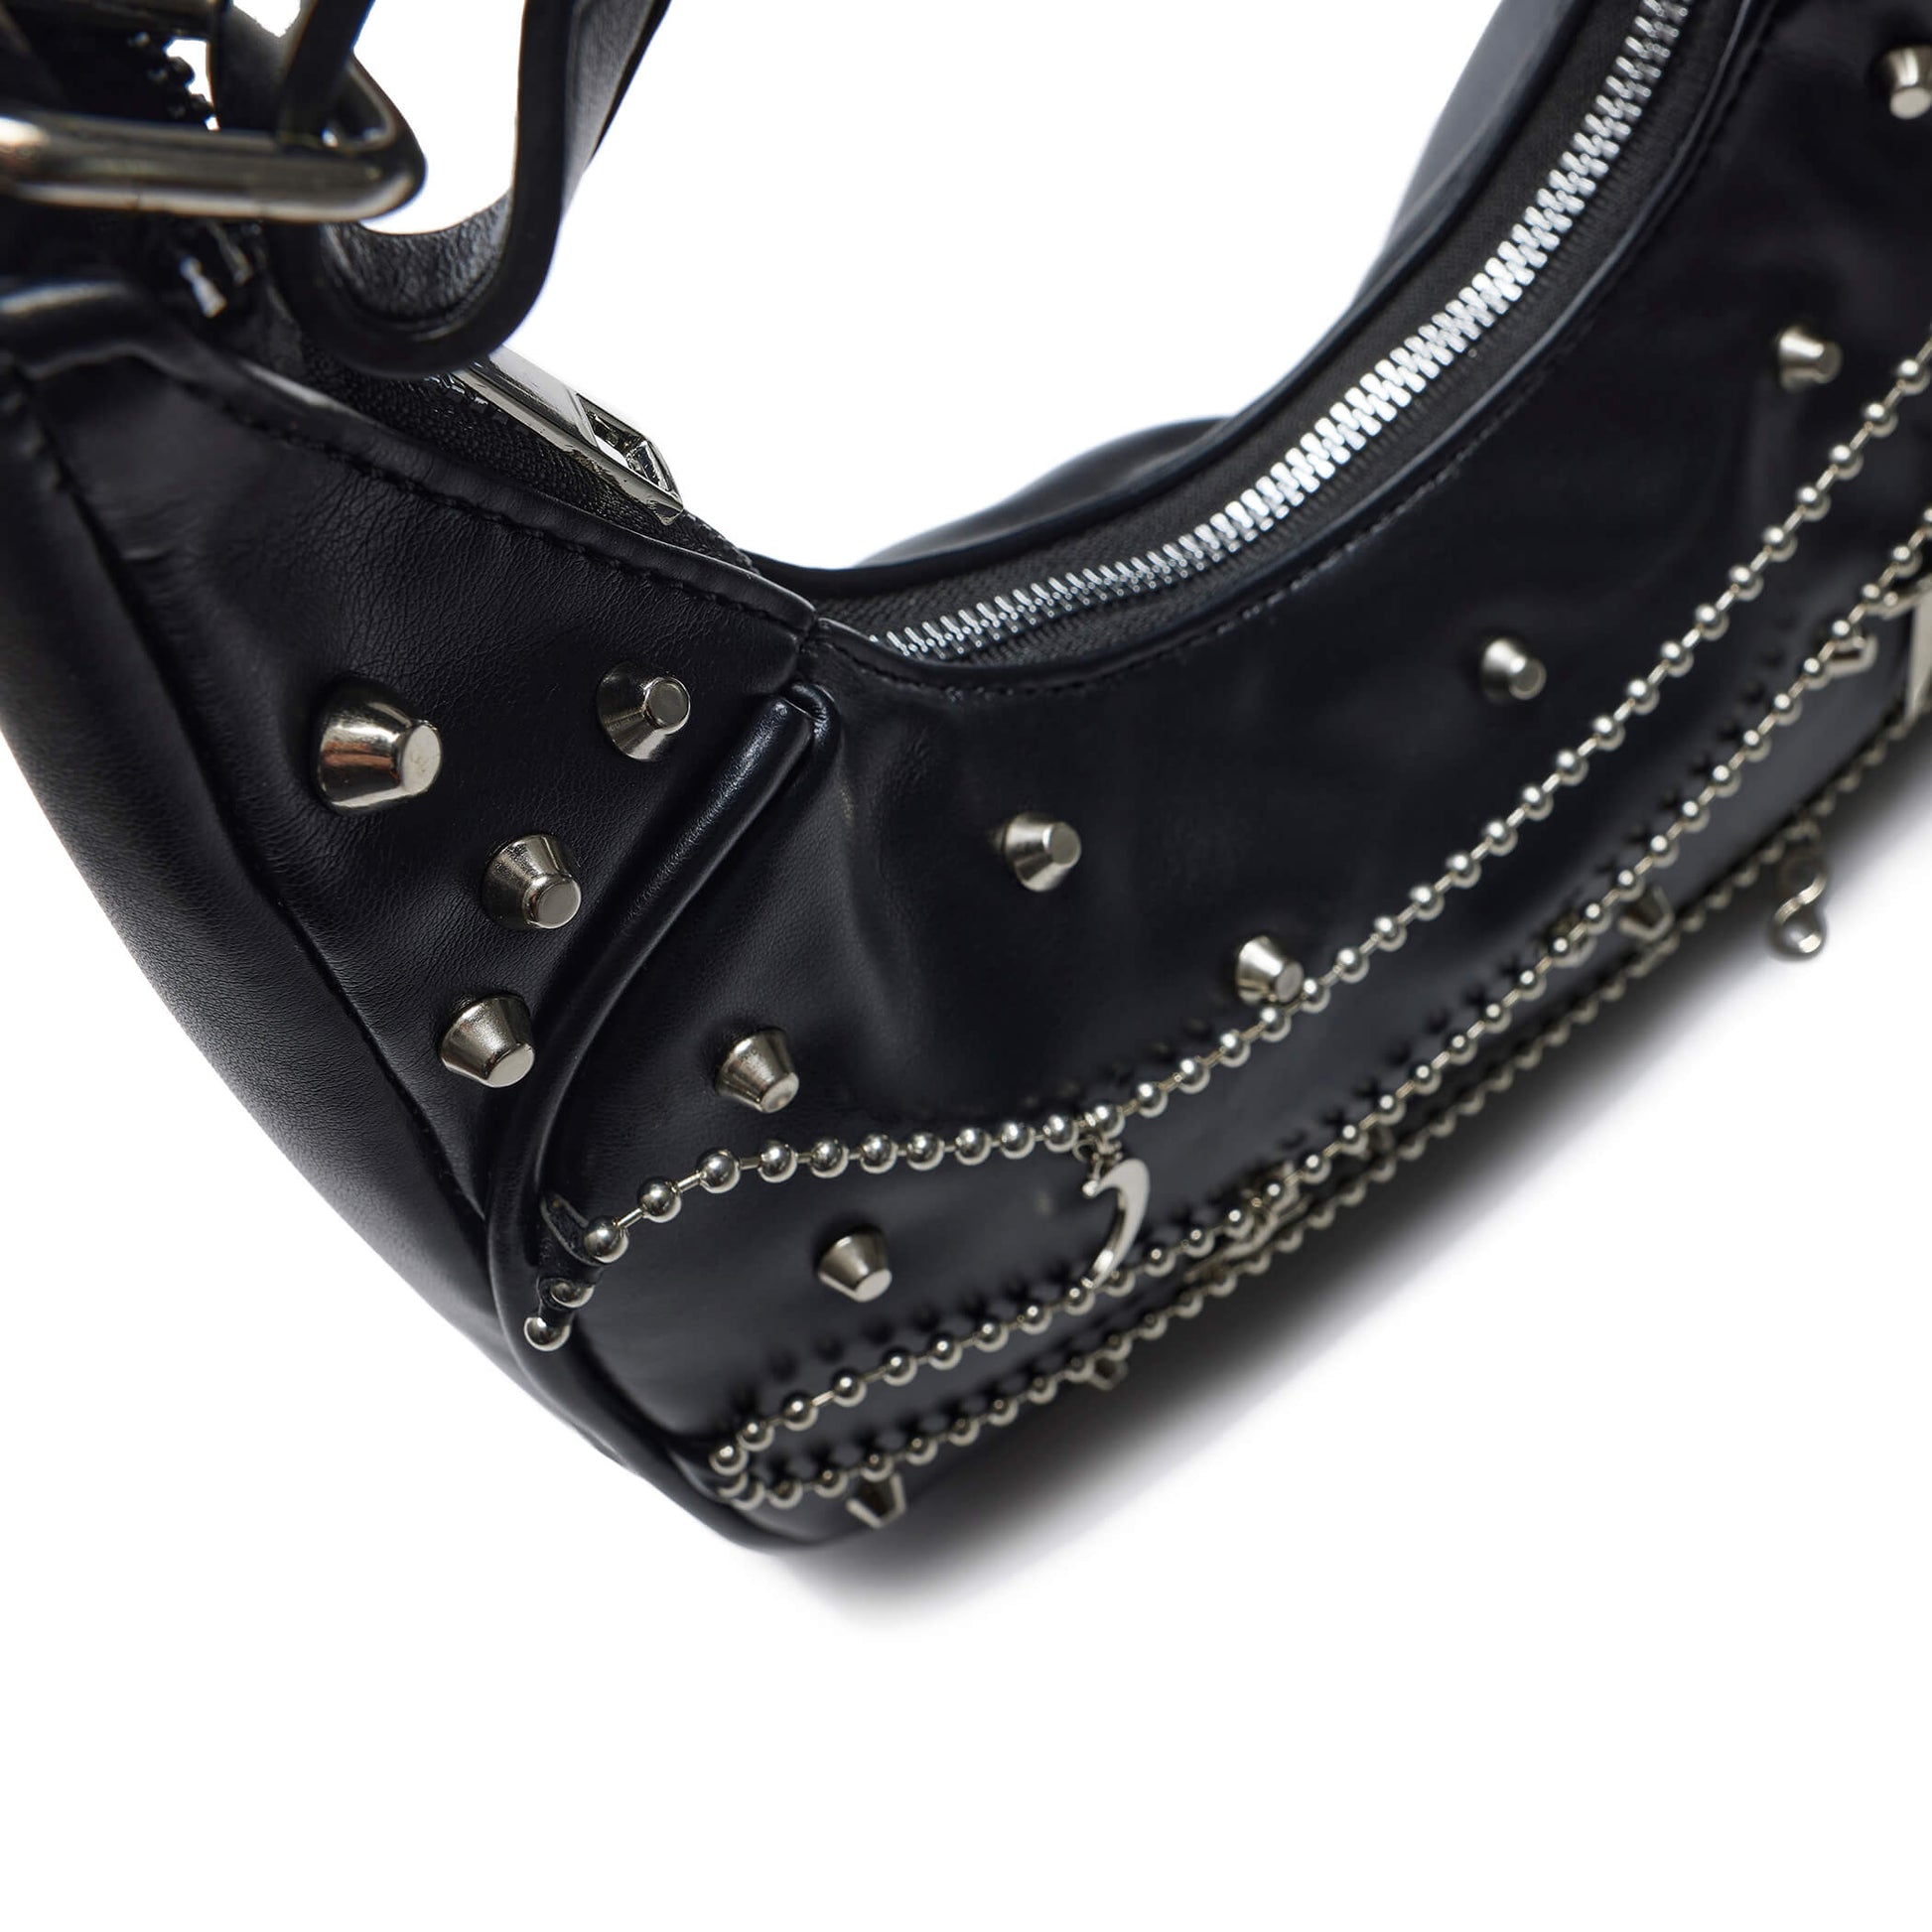 Jinx Mystic Charm Black Shoulder Bag - Accessories - KOI Footwear - OS - Top View